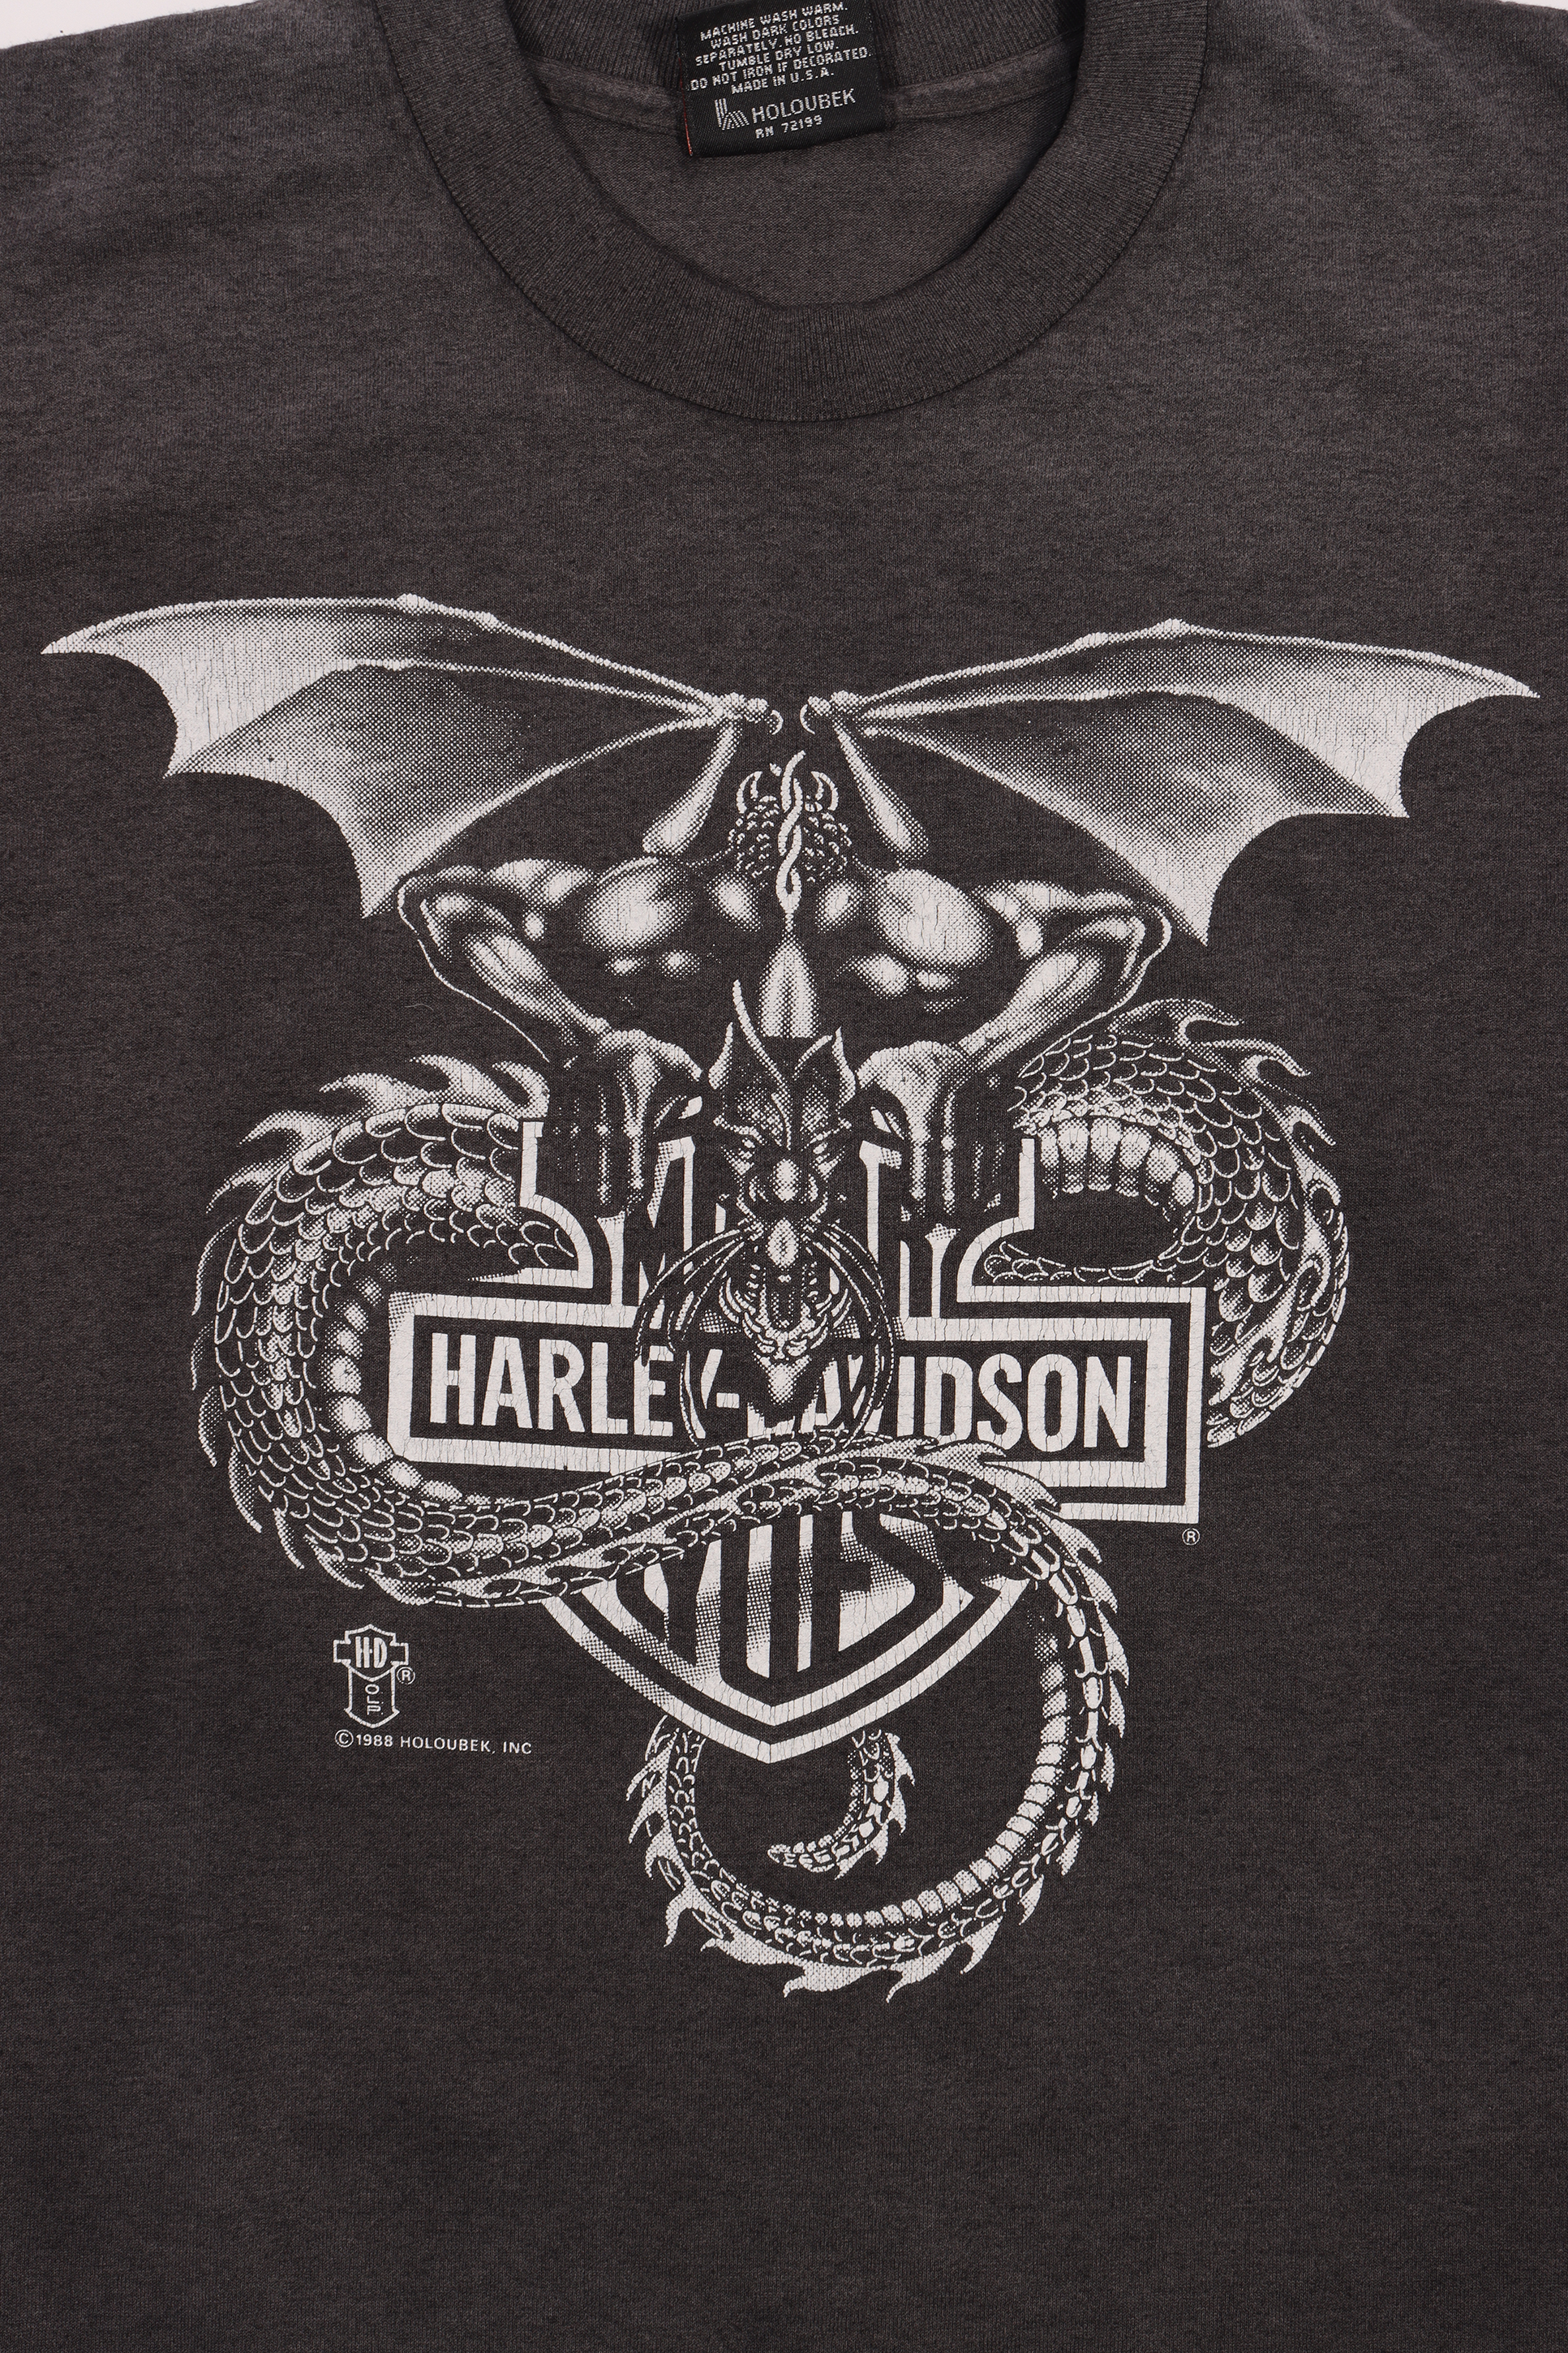 1988 3-D Emblem Harley Davidson